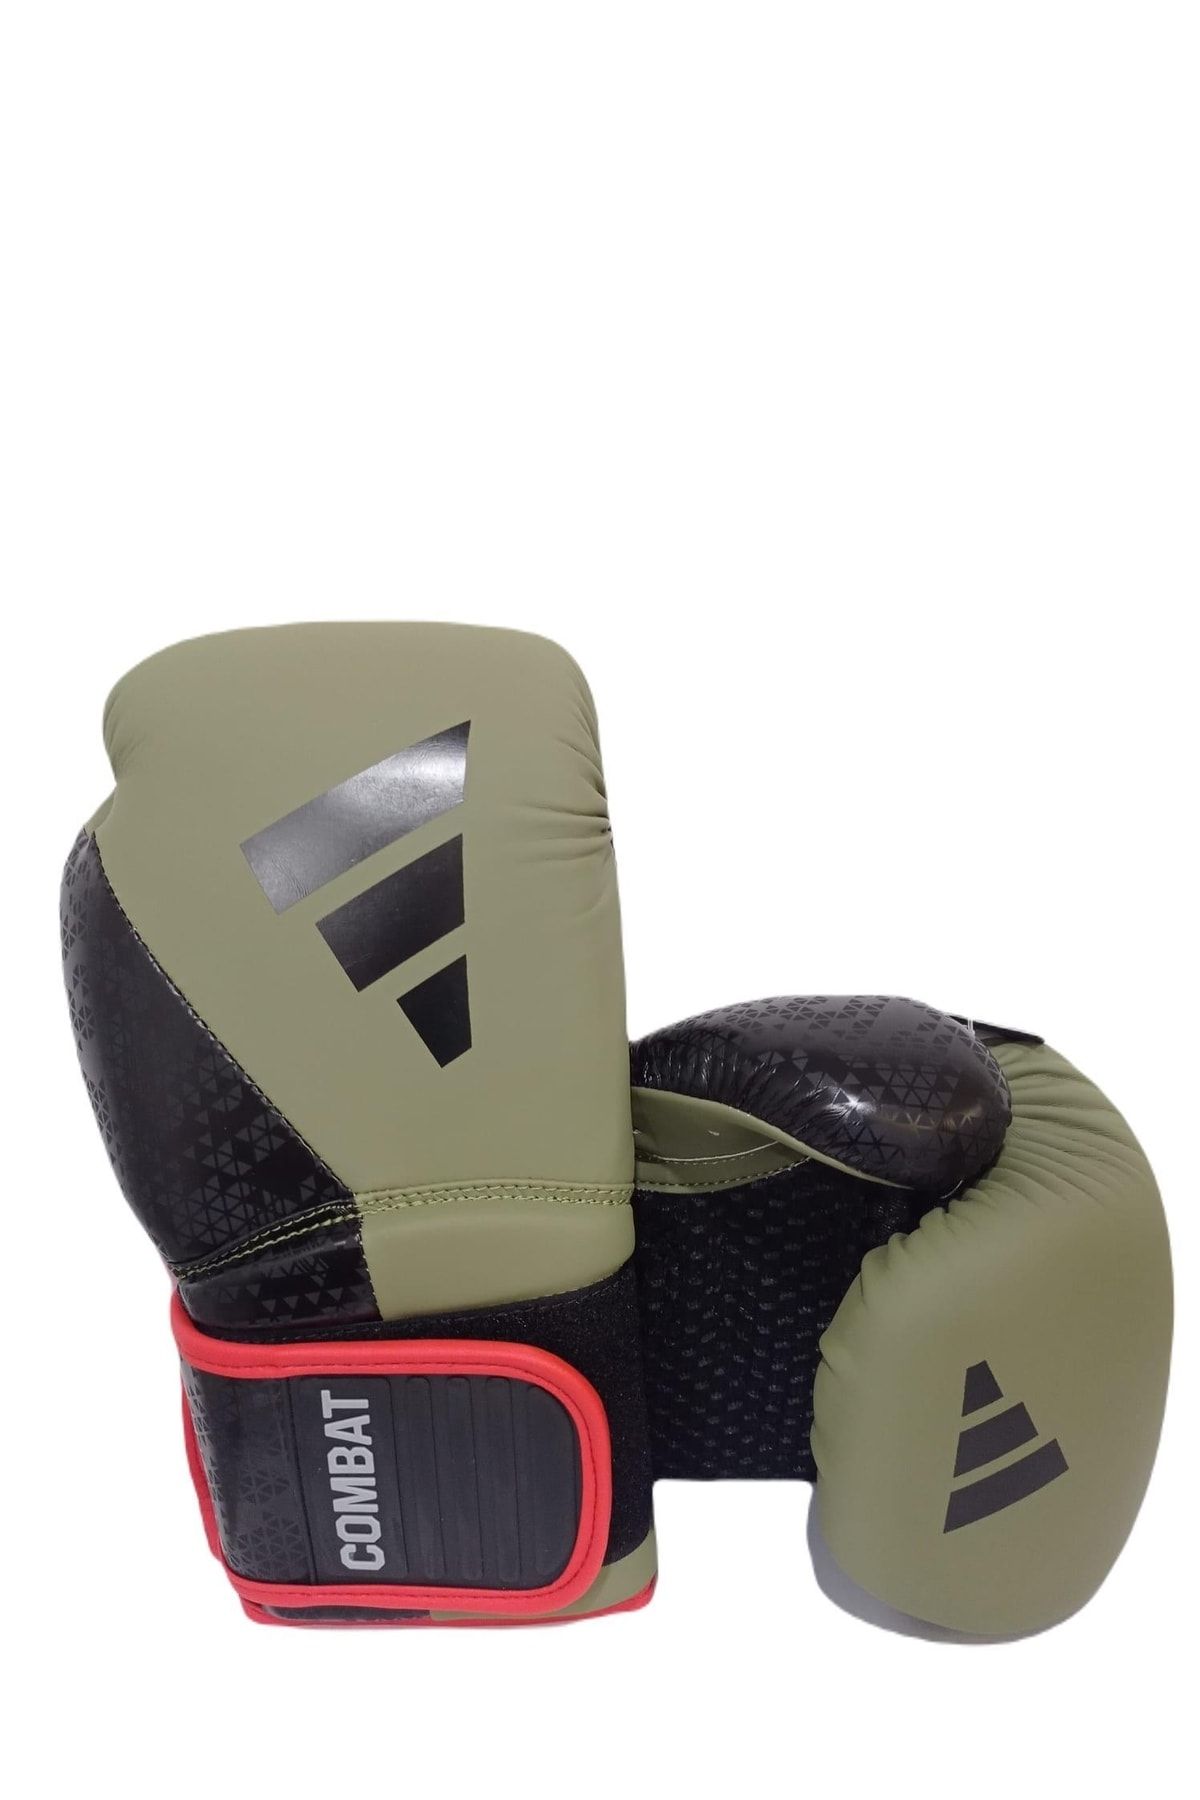 adidas Adıc50tg Combat 50 Boks Eldiveni, Boxing Gloves Özel Seri